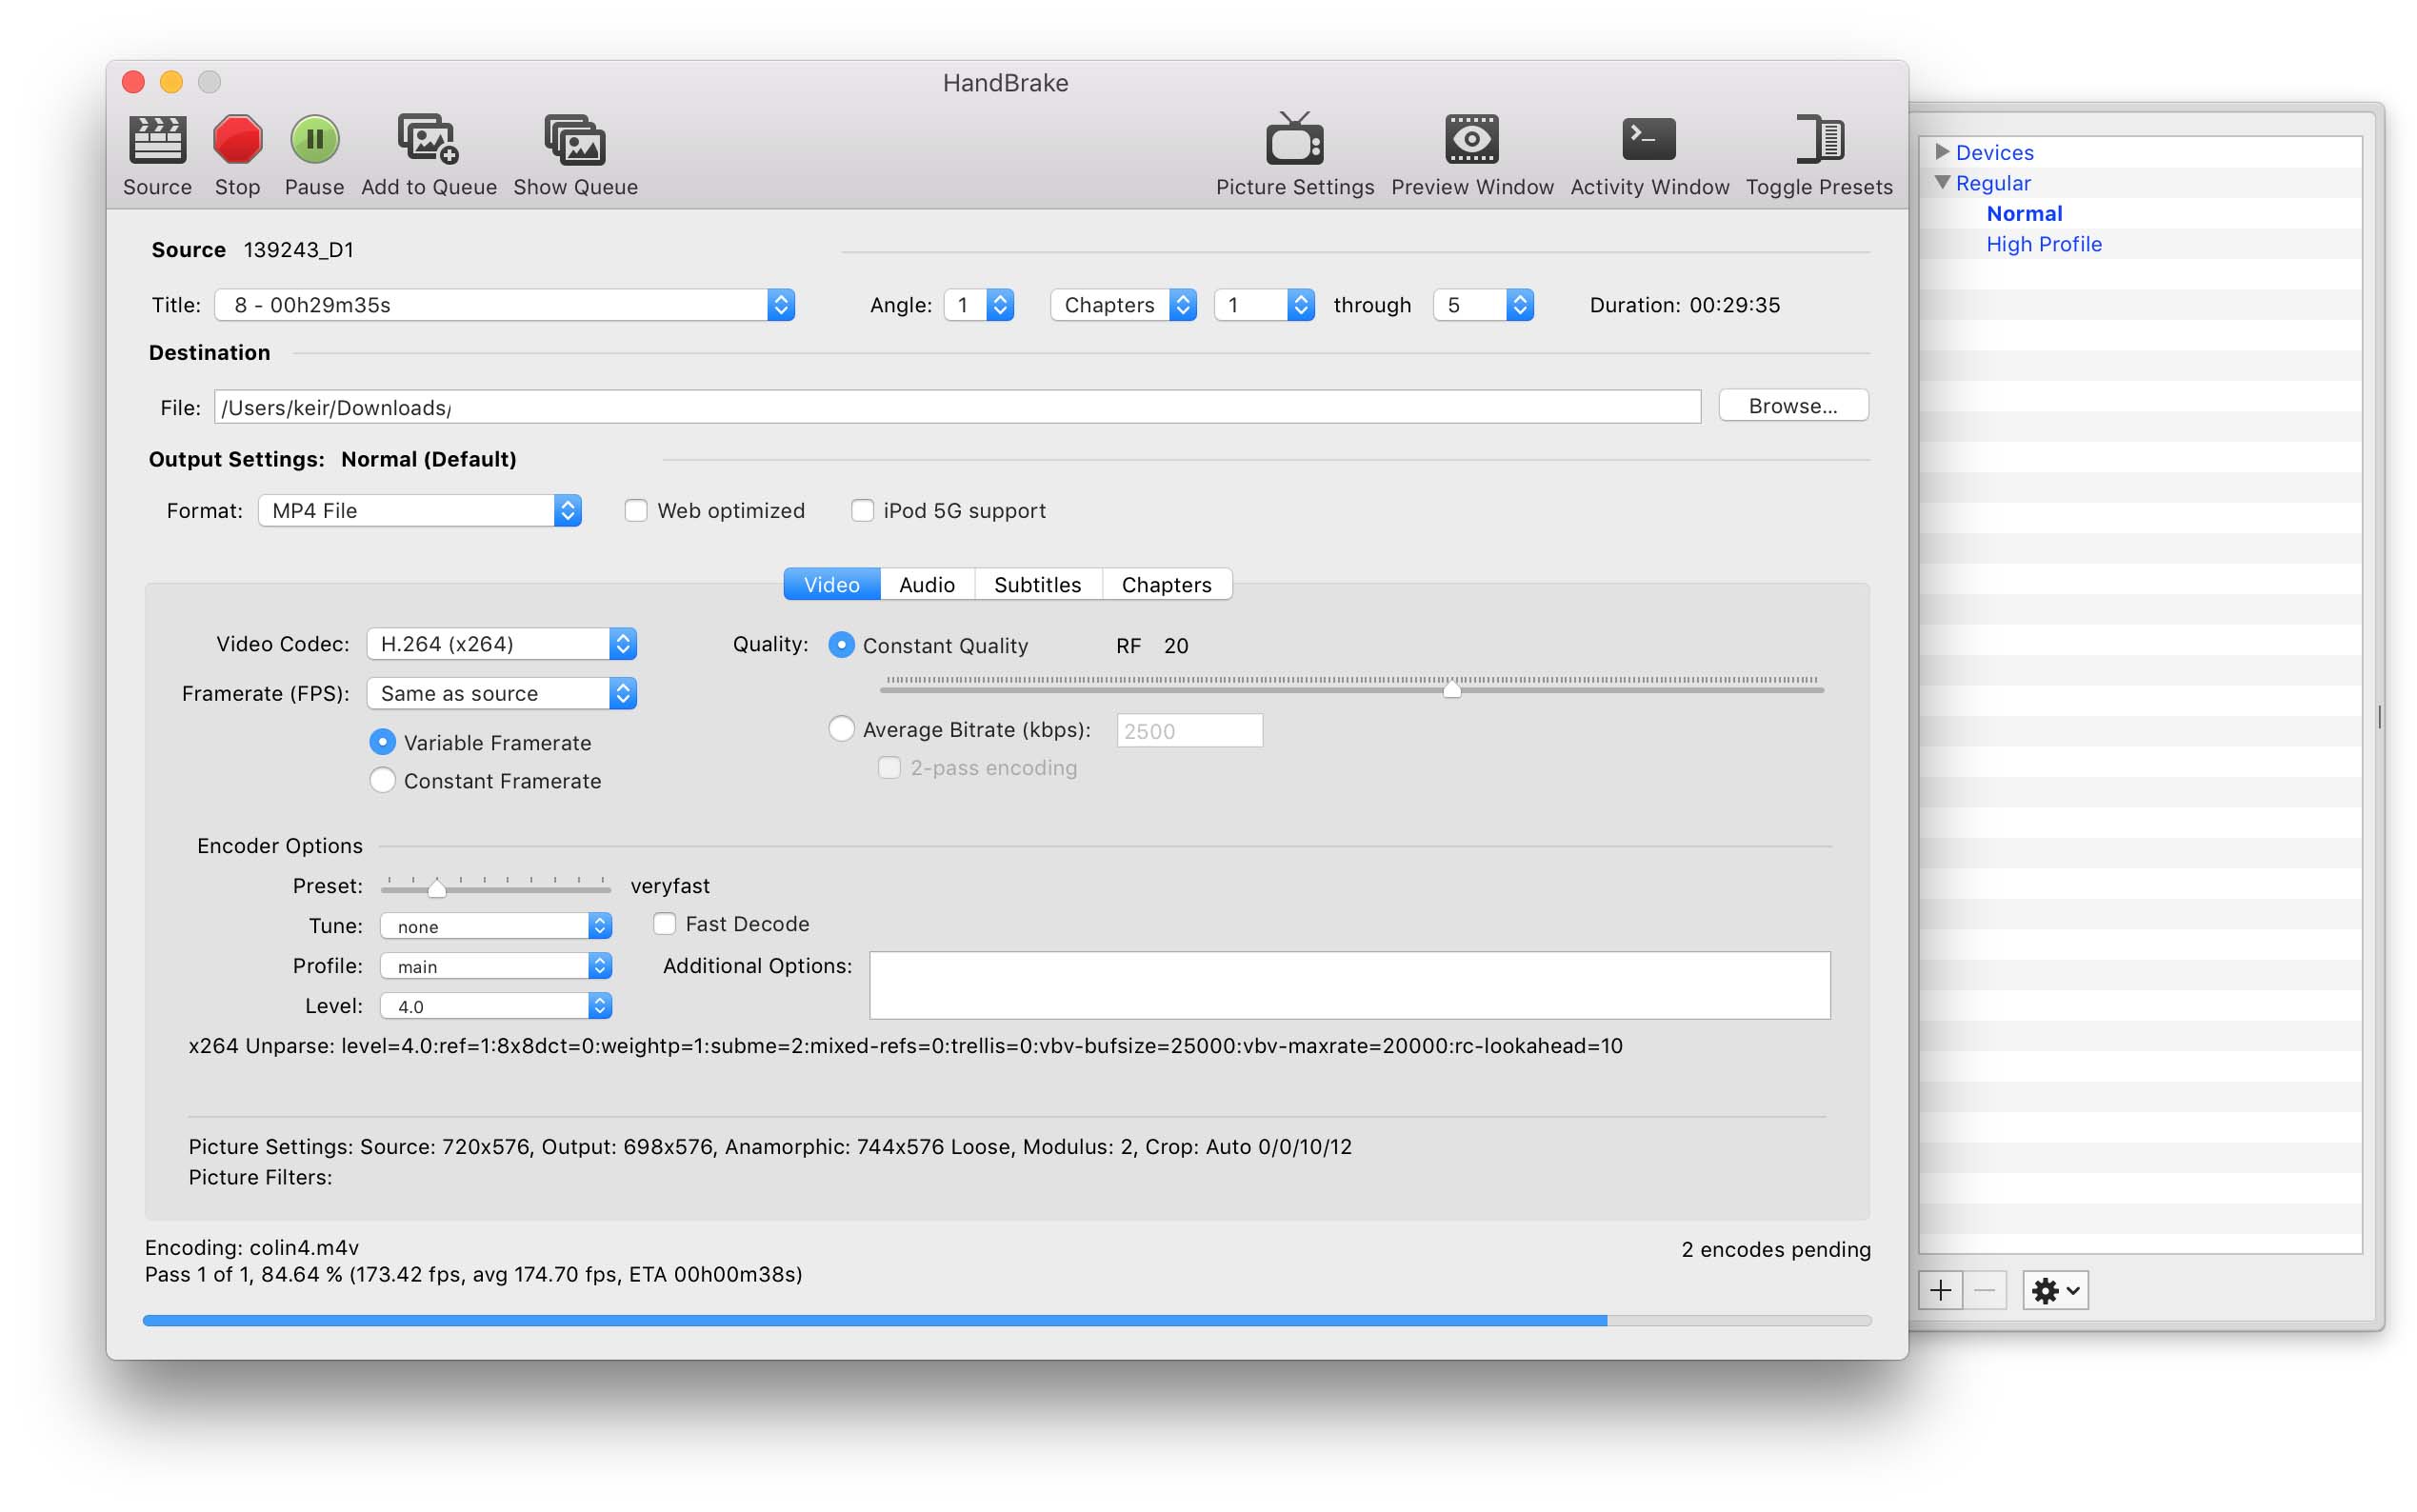 handbrake download mac 10.6 8